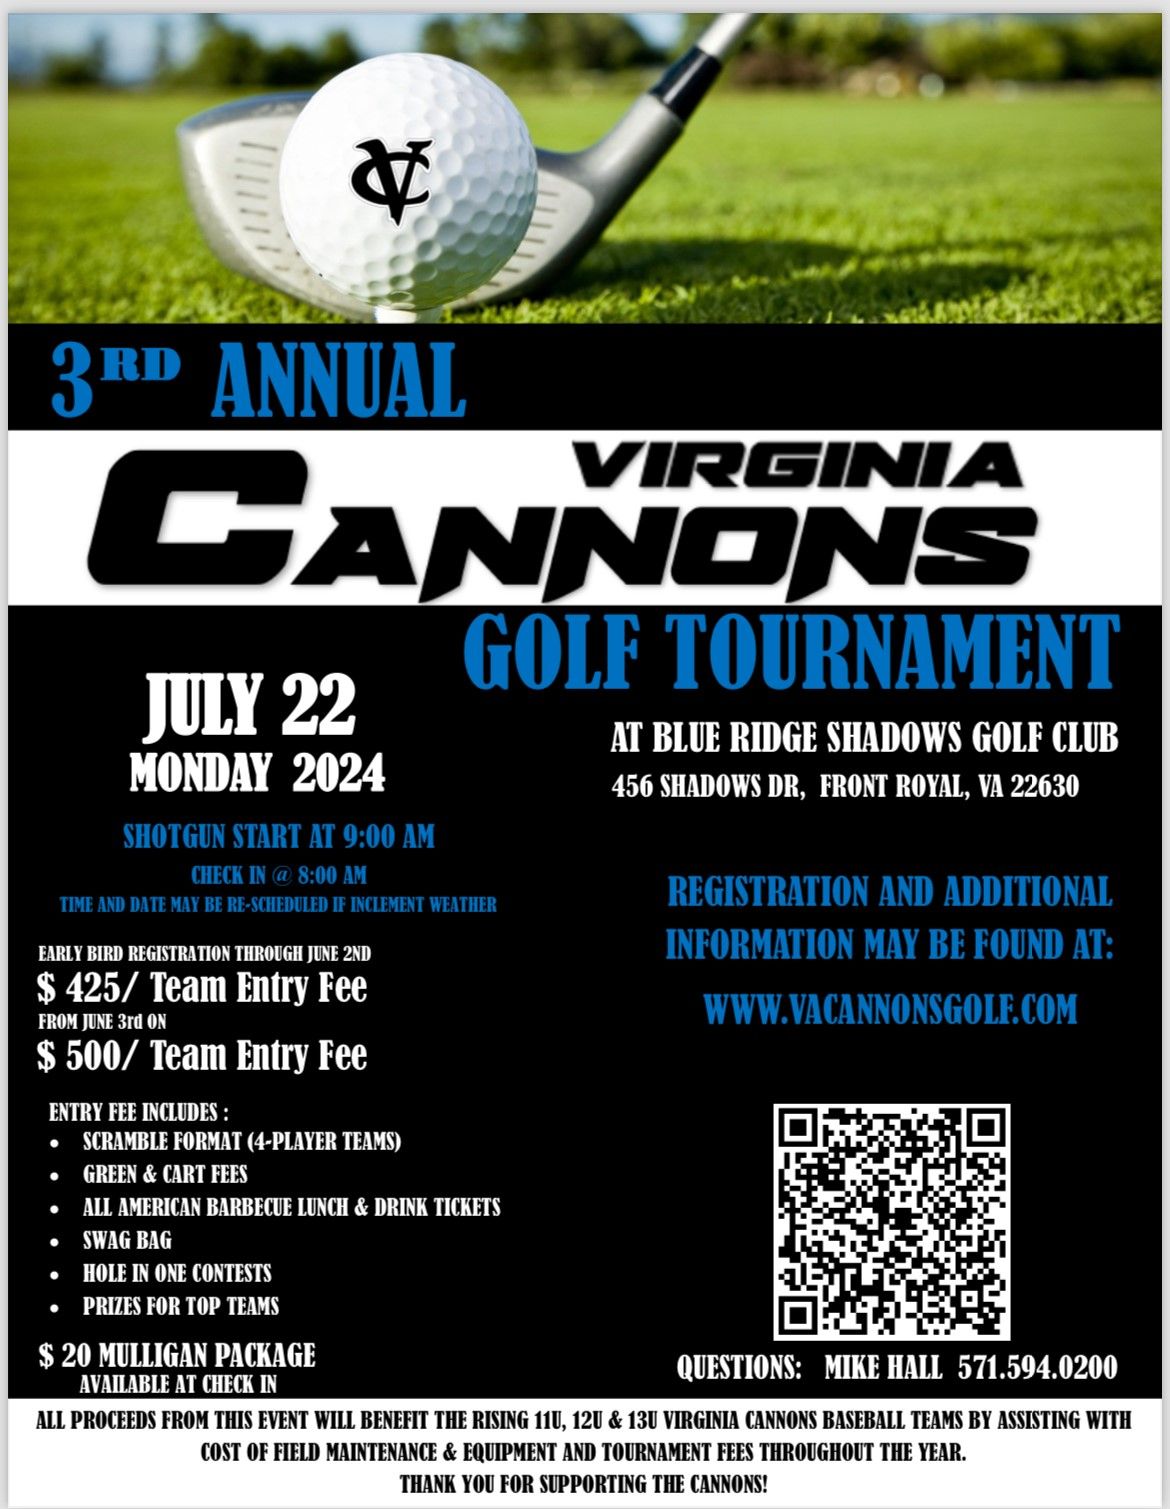 3rd Annual Virginia Cannons Golf Tournament